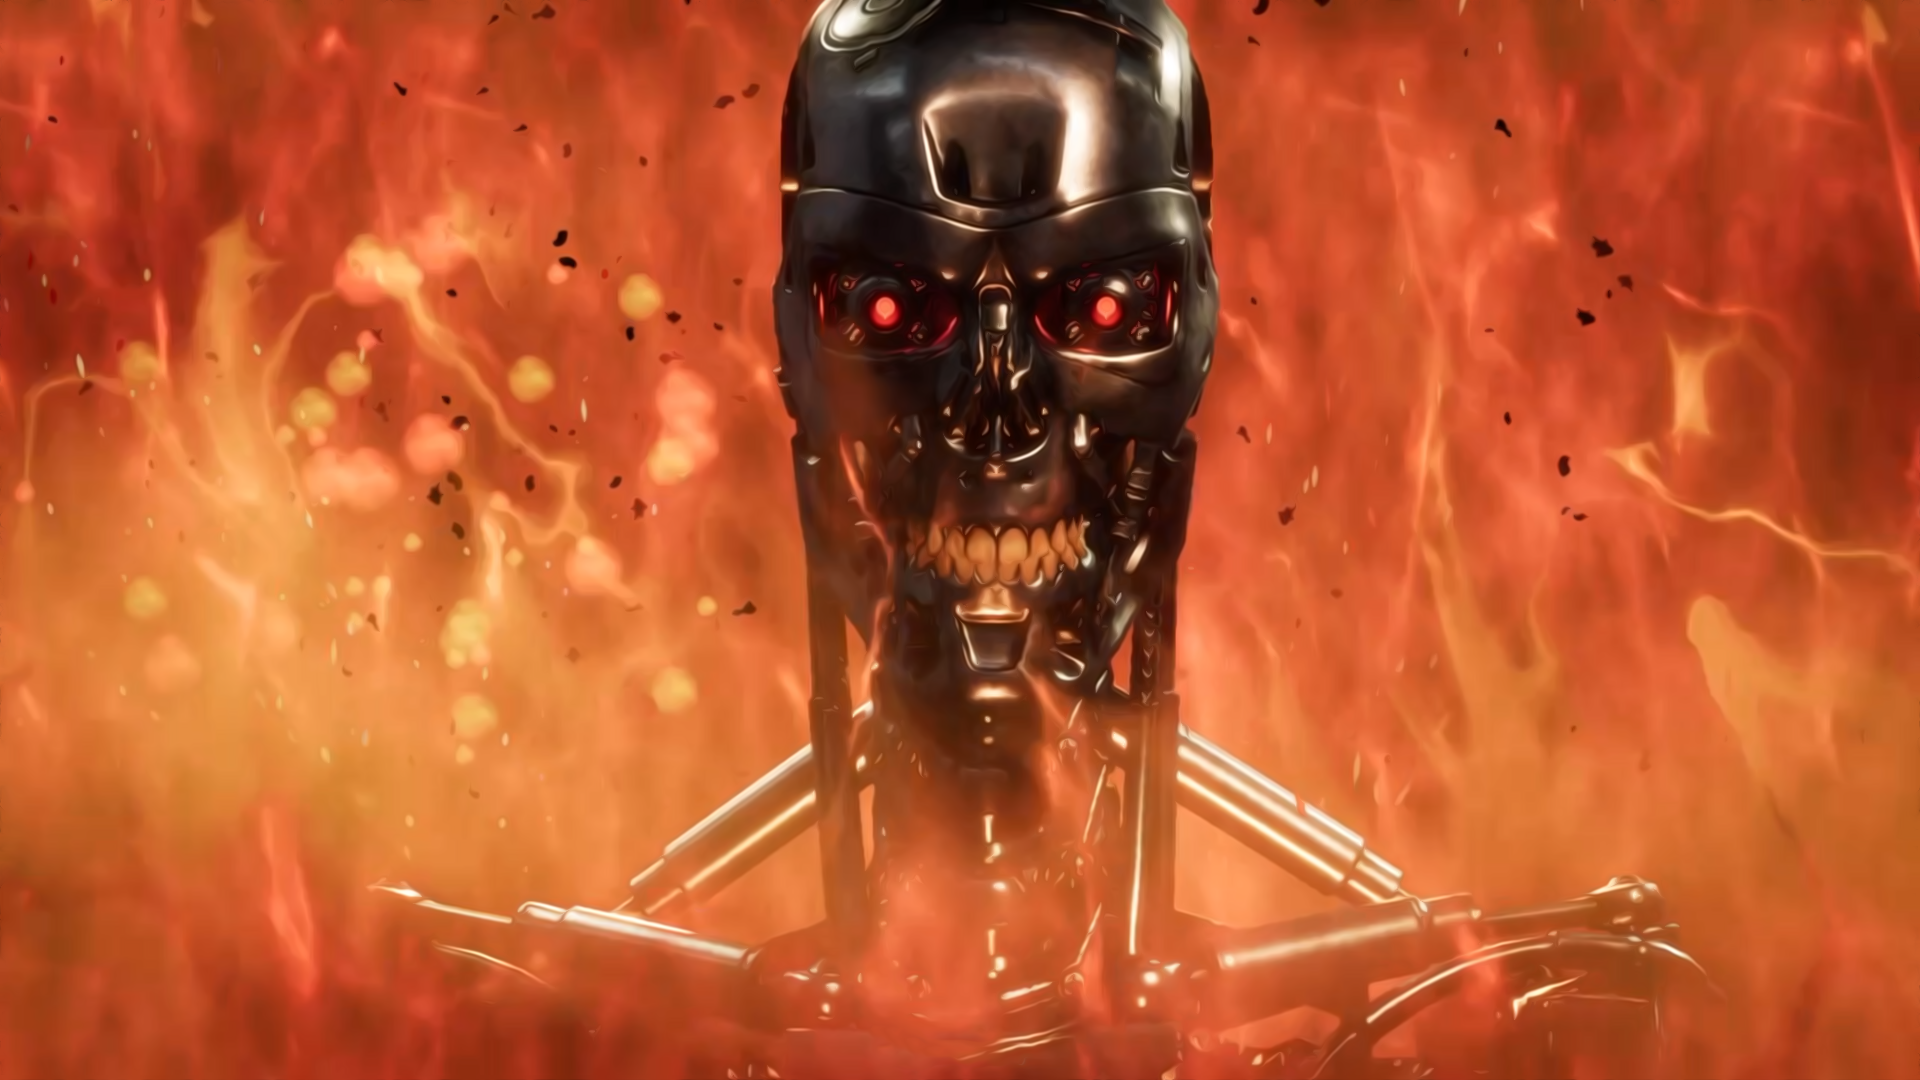 Terminator Mortal Kombat 11 Video Games Cyborg Endoskeleton Fire 1920x1080